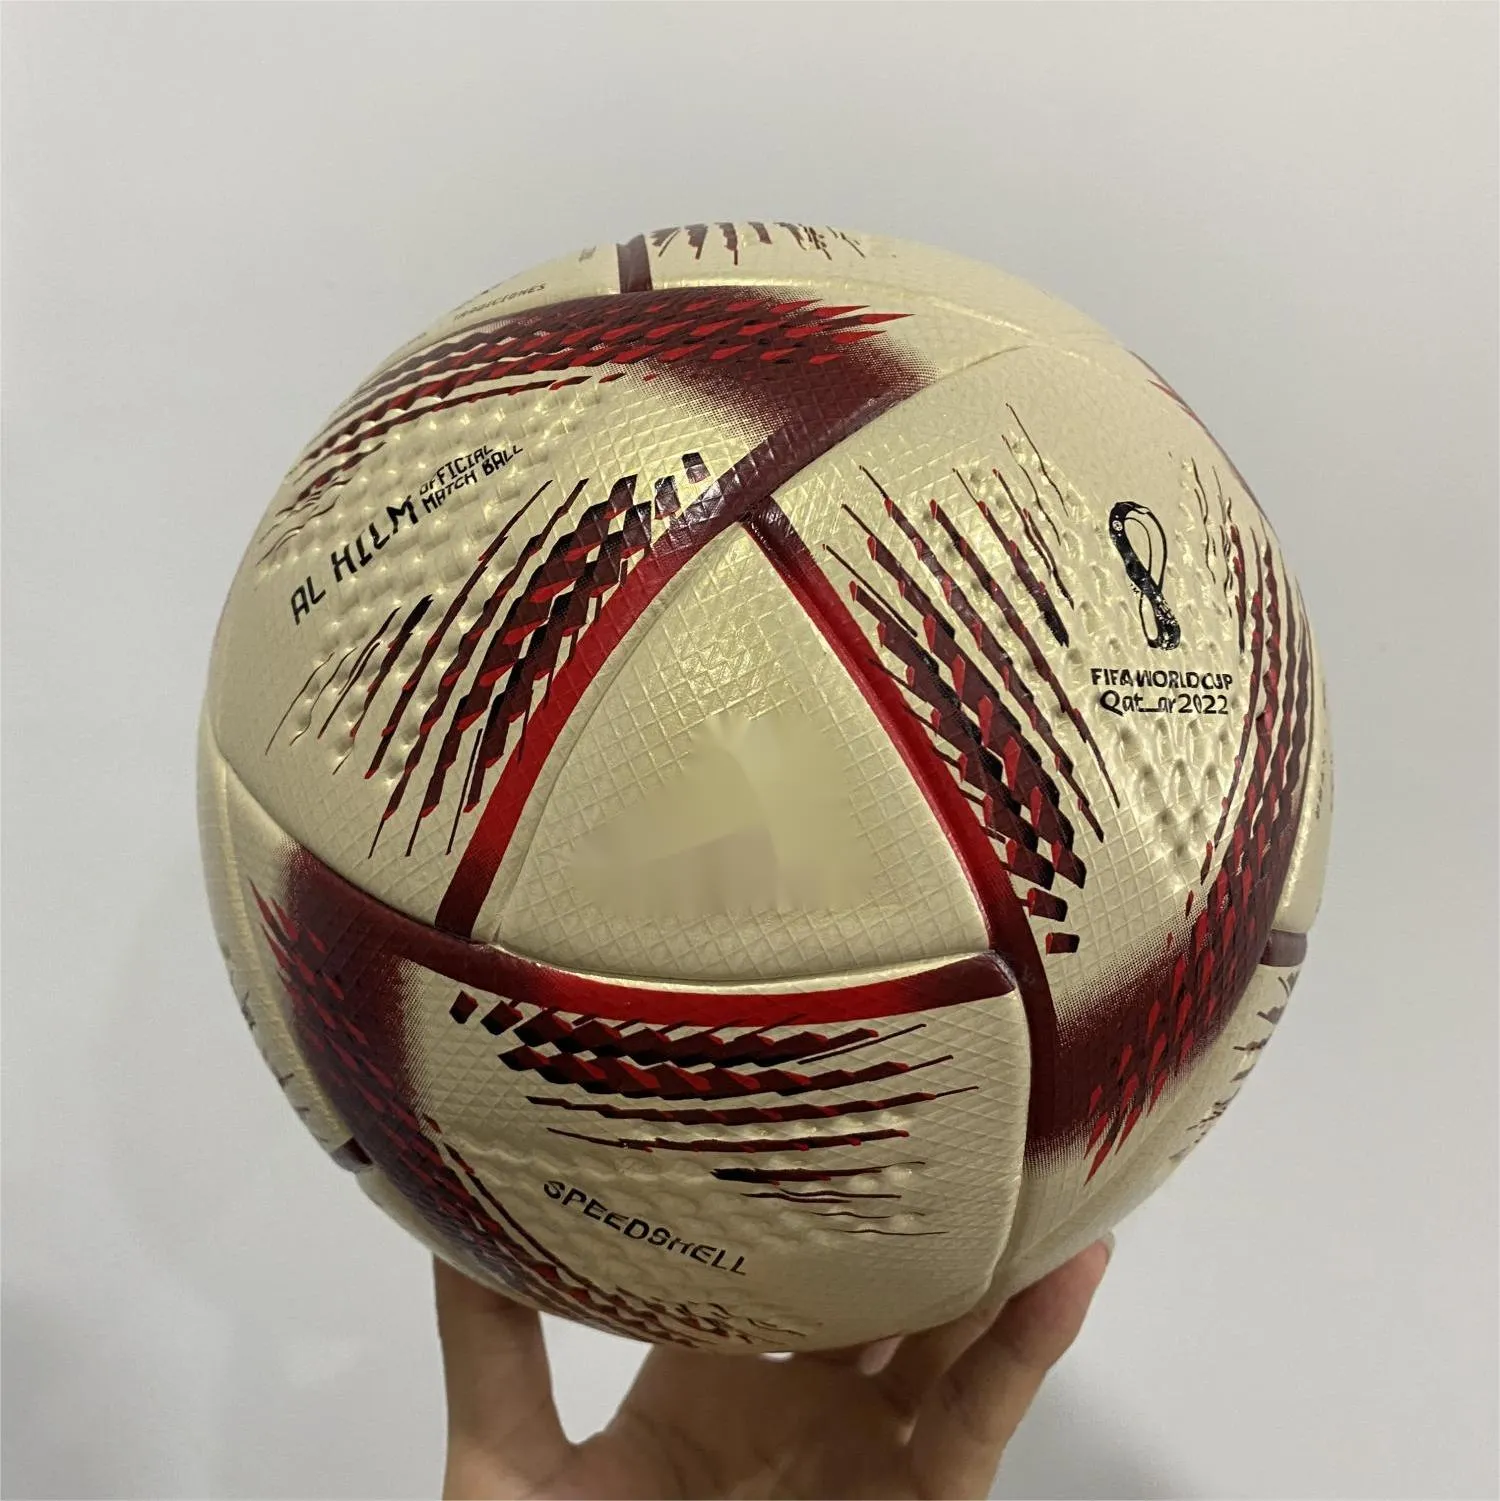 Bolas de futebol atacado 2022 qatar size mundial autêntico 5 combina o material de folheado de futebol al hilm e al rihla jabulani brasiluca teamgeist36578